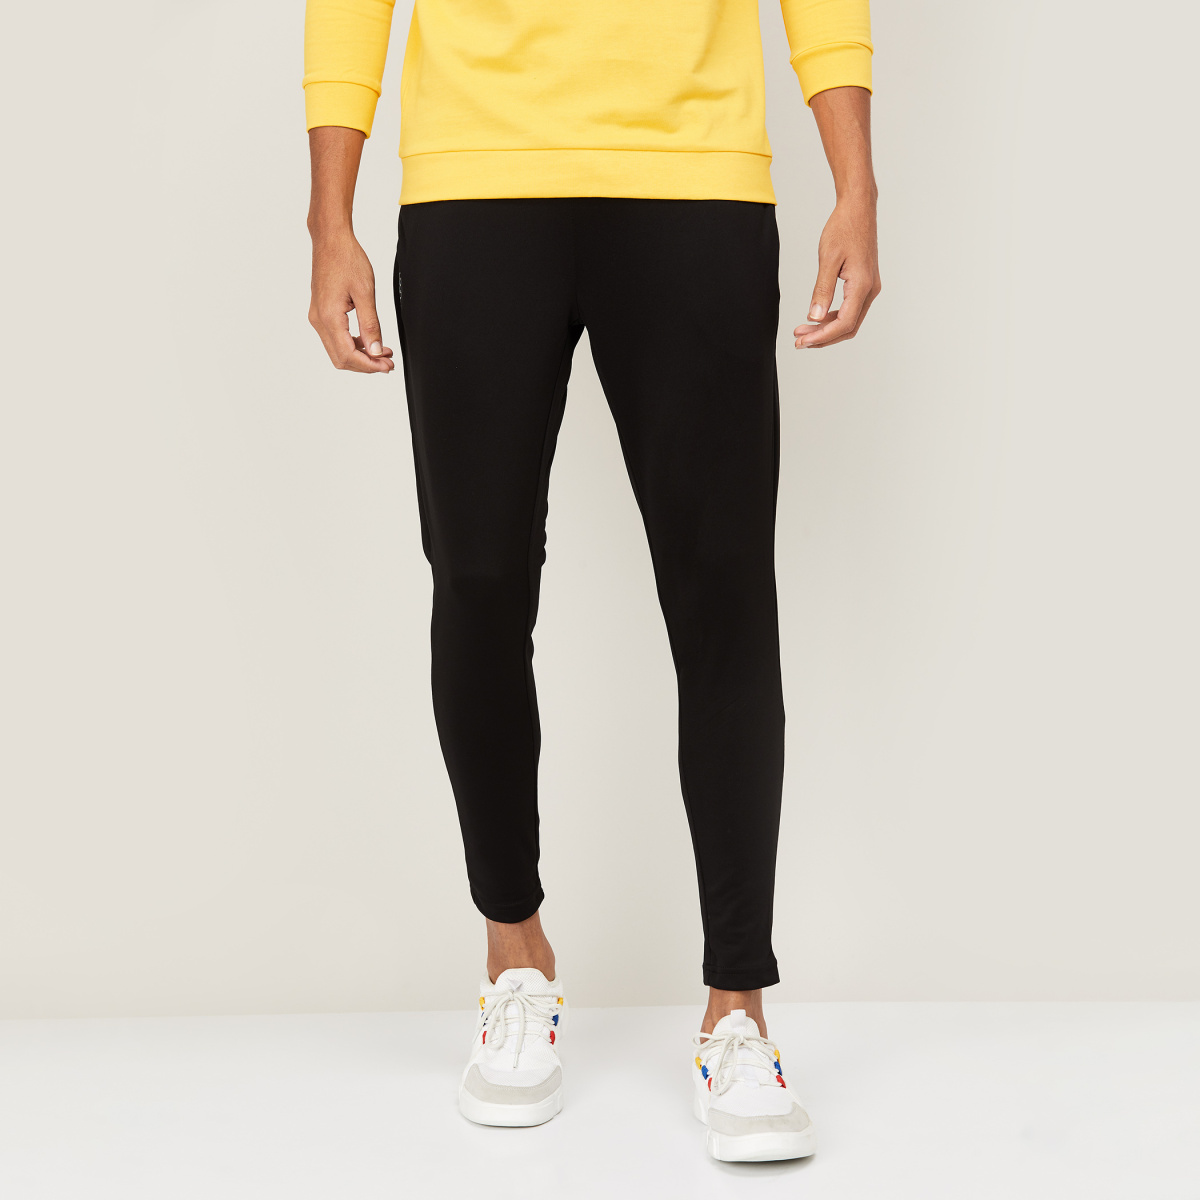 Amazon.com : Kappa SNAKO Men jogging pants grey 703885, konfektionsgröße:M  : Clothing, Shoes & Jewelry